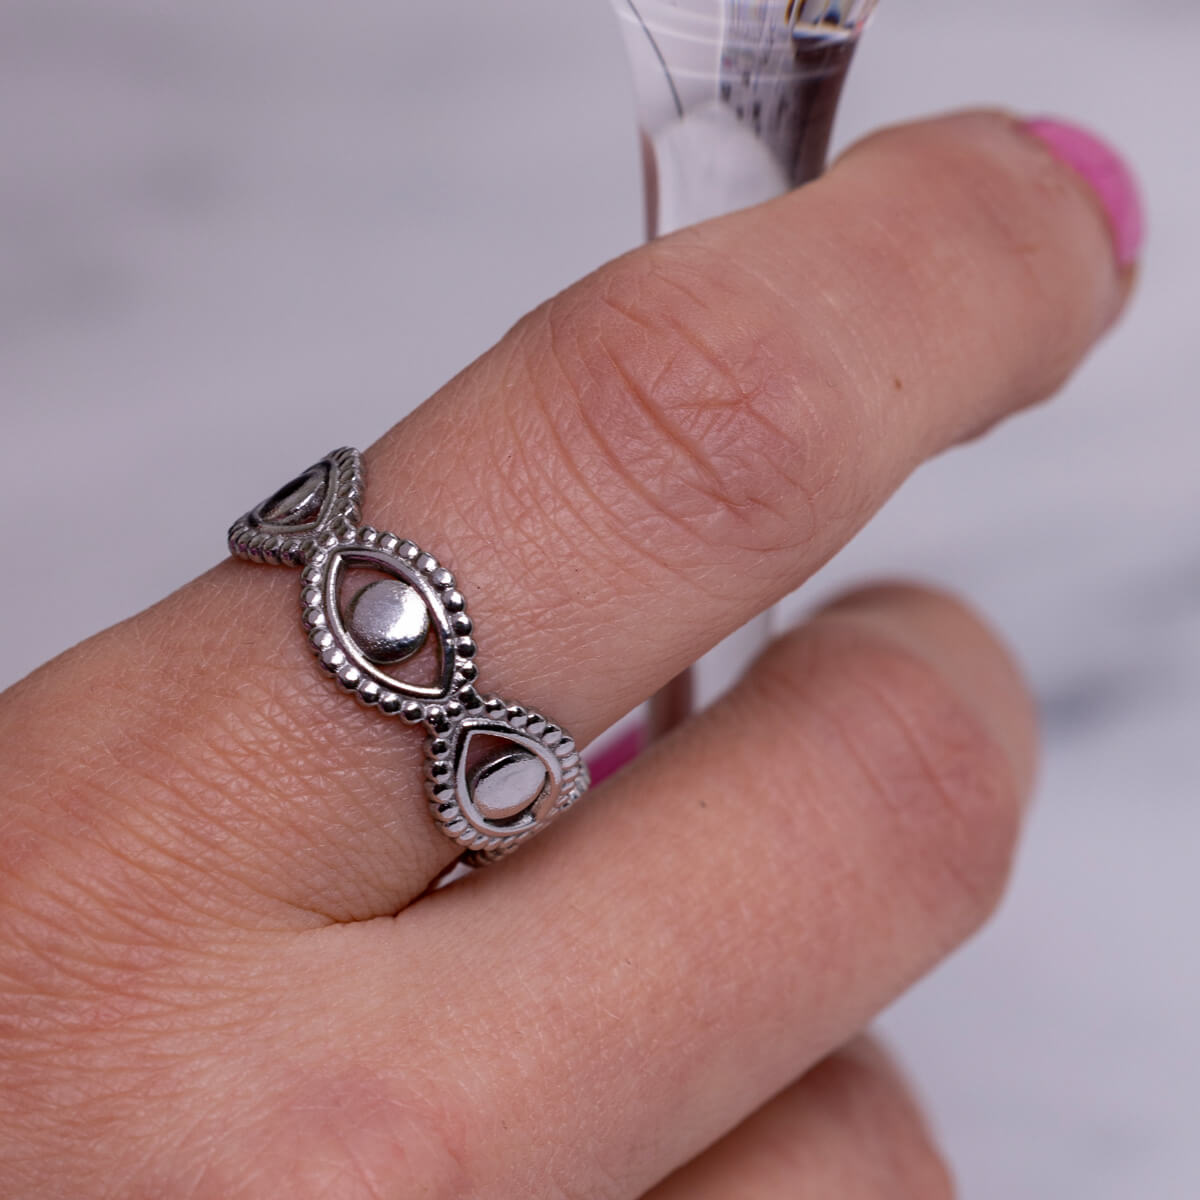 Evil eye ring single size ring (Steel 316L)